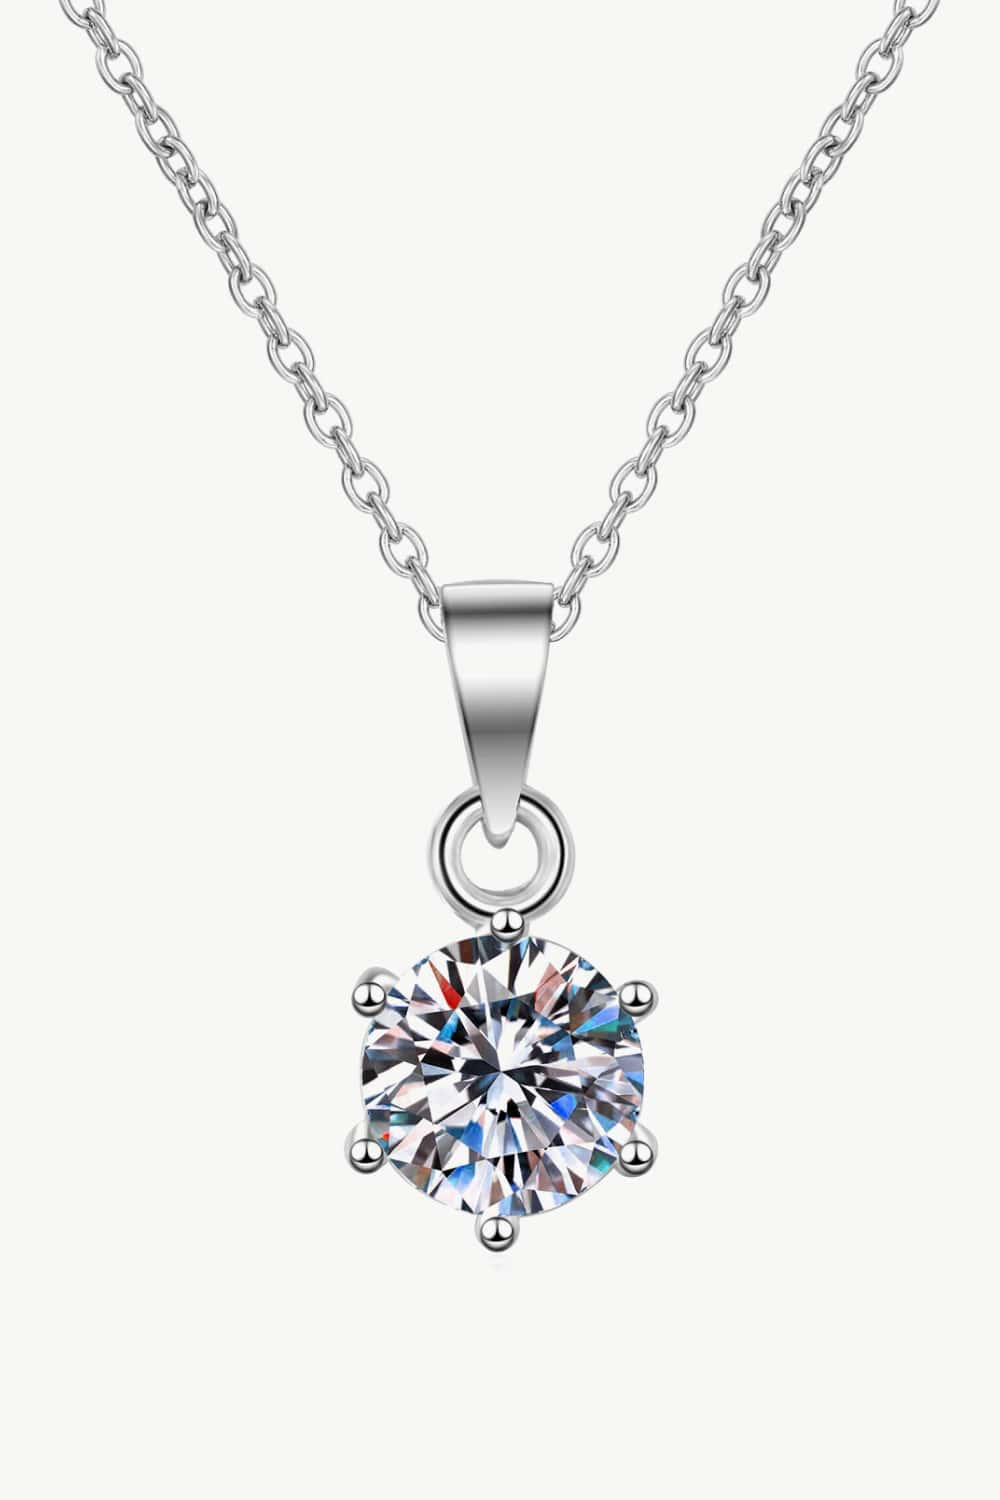 Get What You Need Moissanite Pendant Necklace - DromedarShop.com Online Boutique